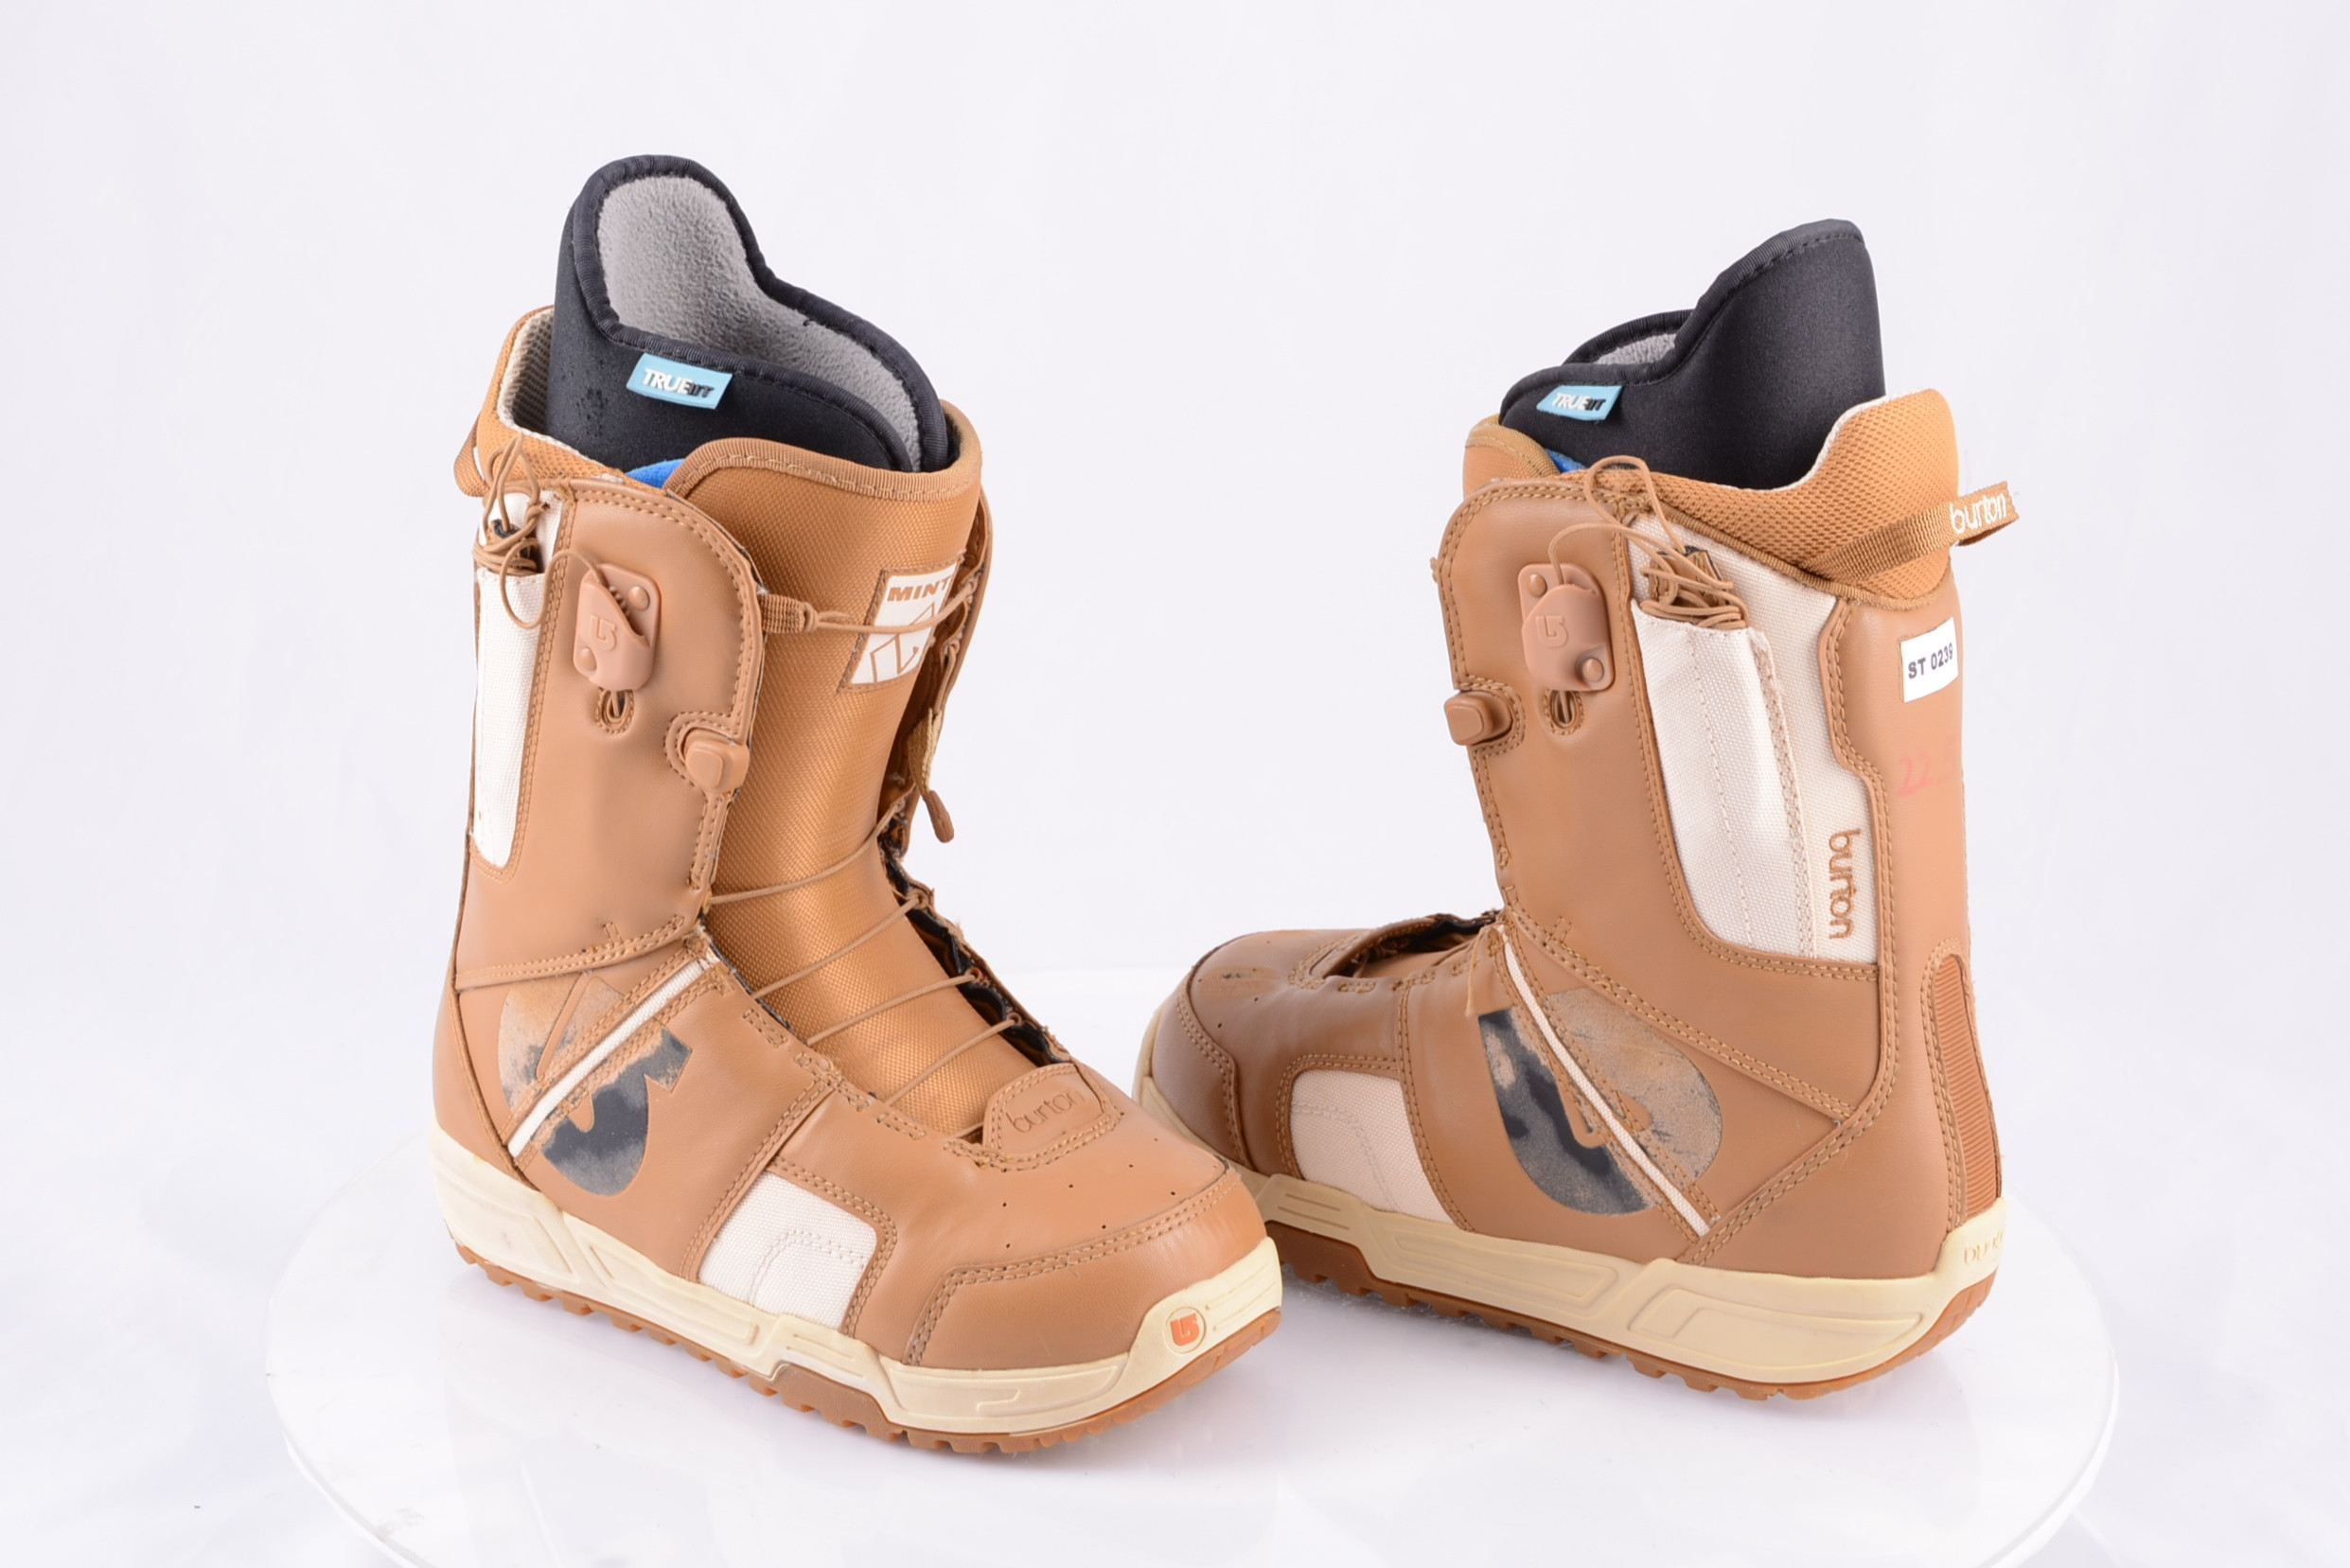 snowboard schoenen MINT brown, TRUFIT, control lacing